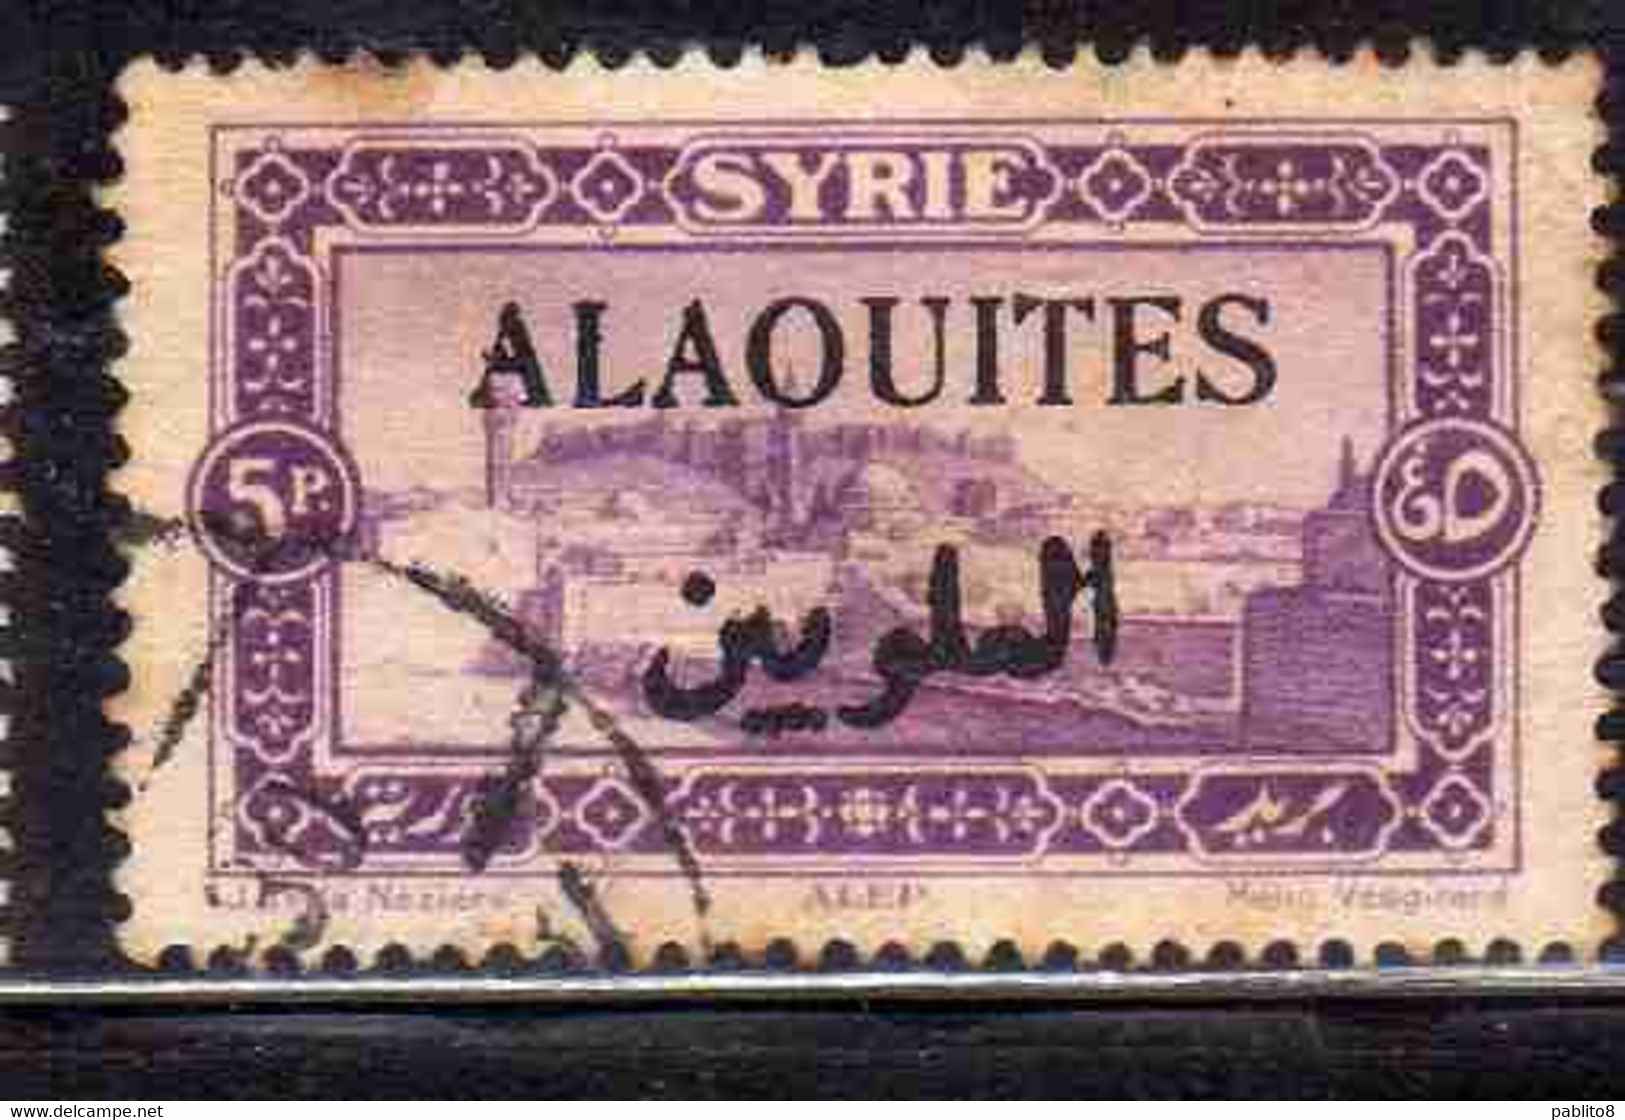 ALAOUITES SYRIA SIRIA ALAQUITES 1925 VIEW OF ALEPPO 5p USED USATO OBLITERE' - Gebruikt